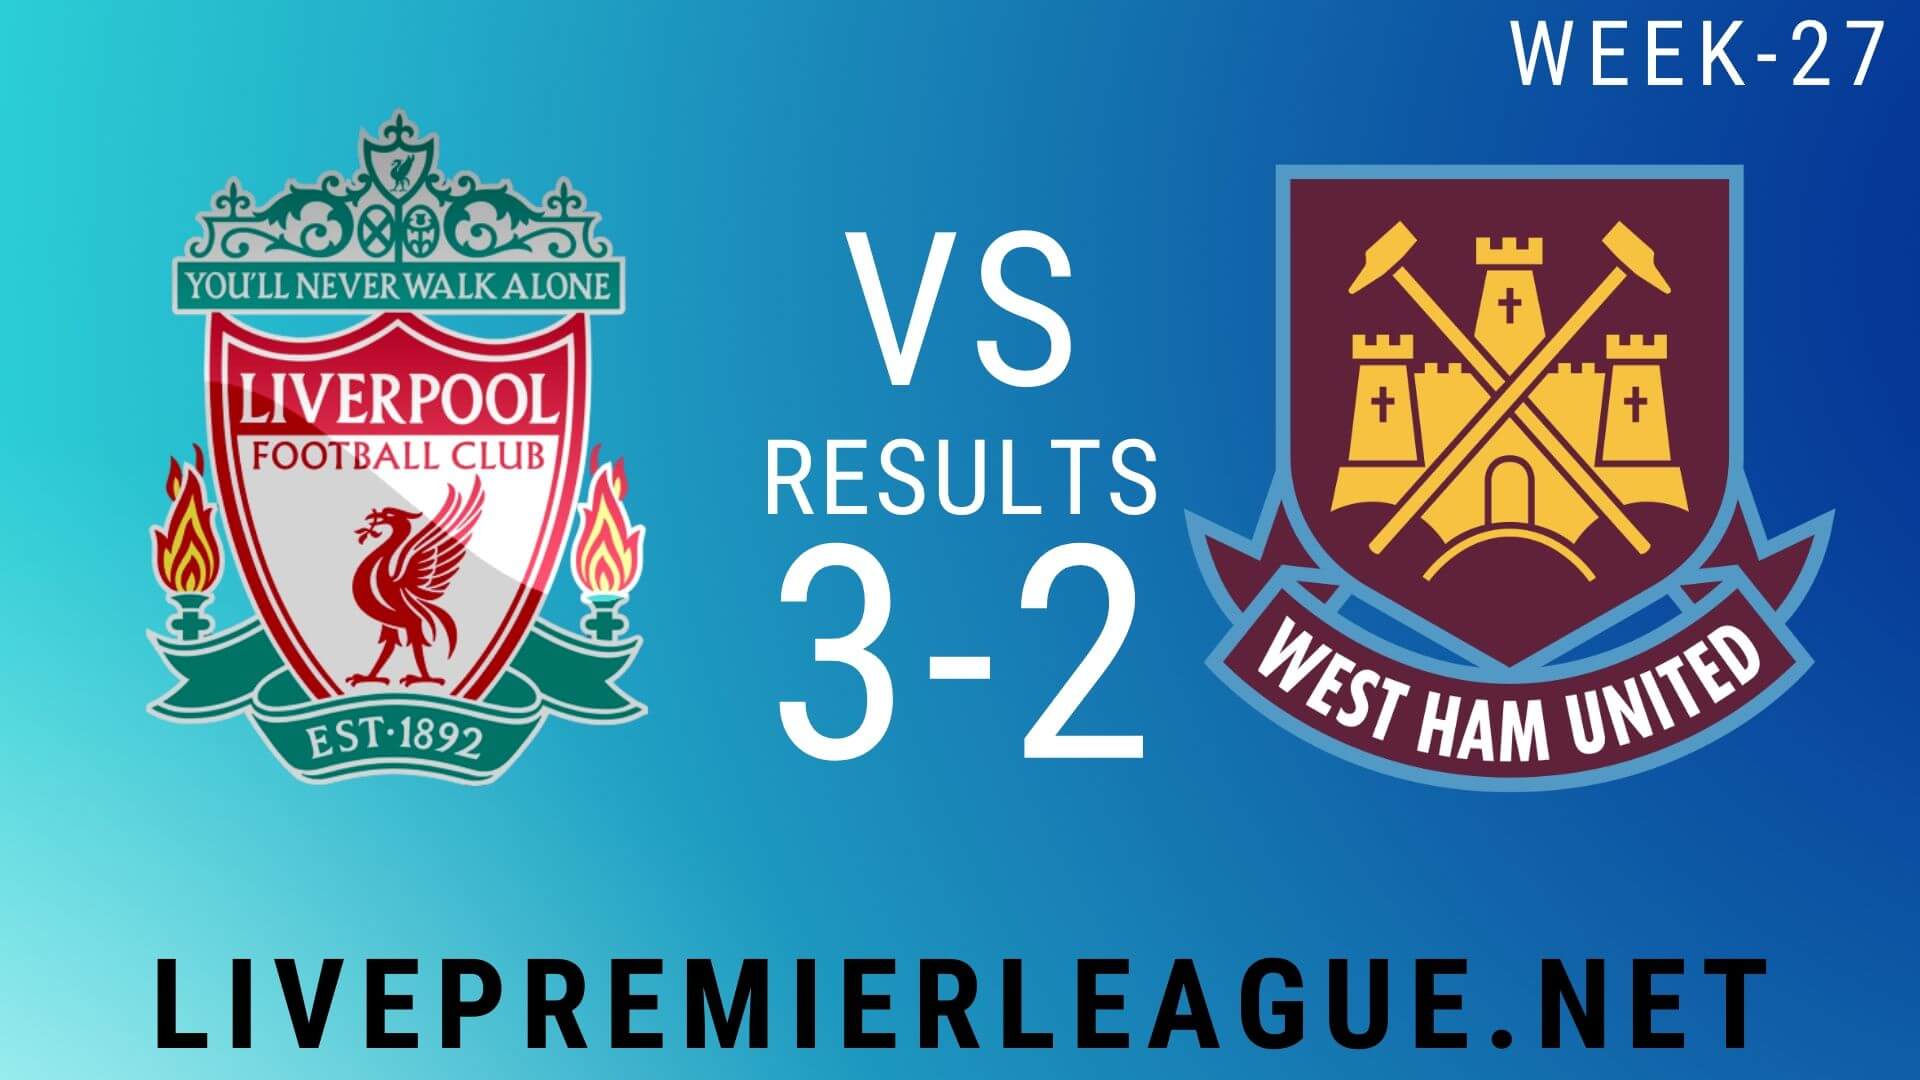 Liverpool Vs West Ham United | Week 27 Result 2020